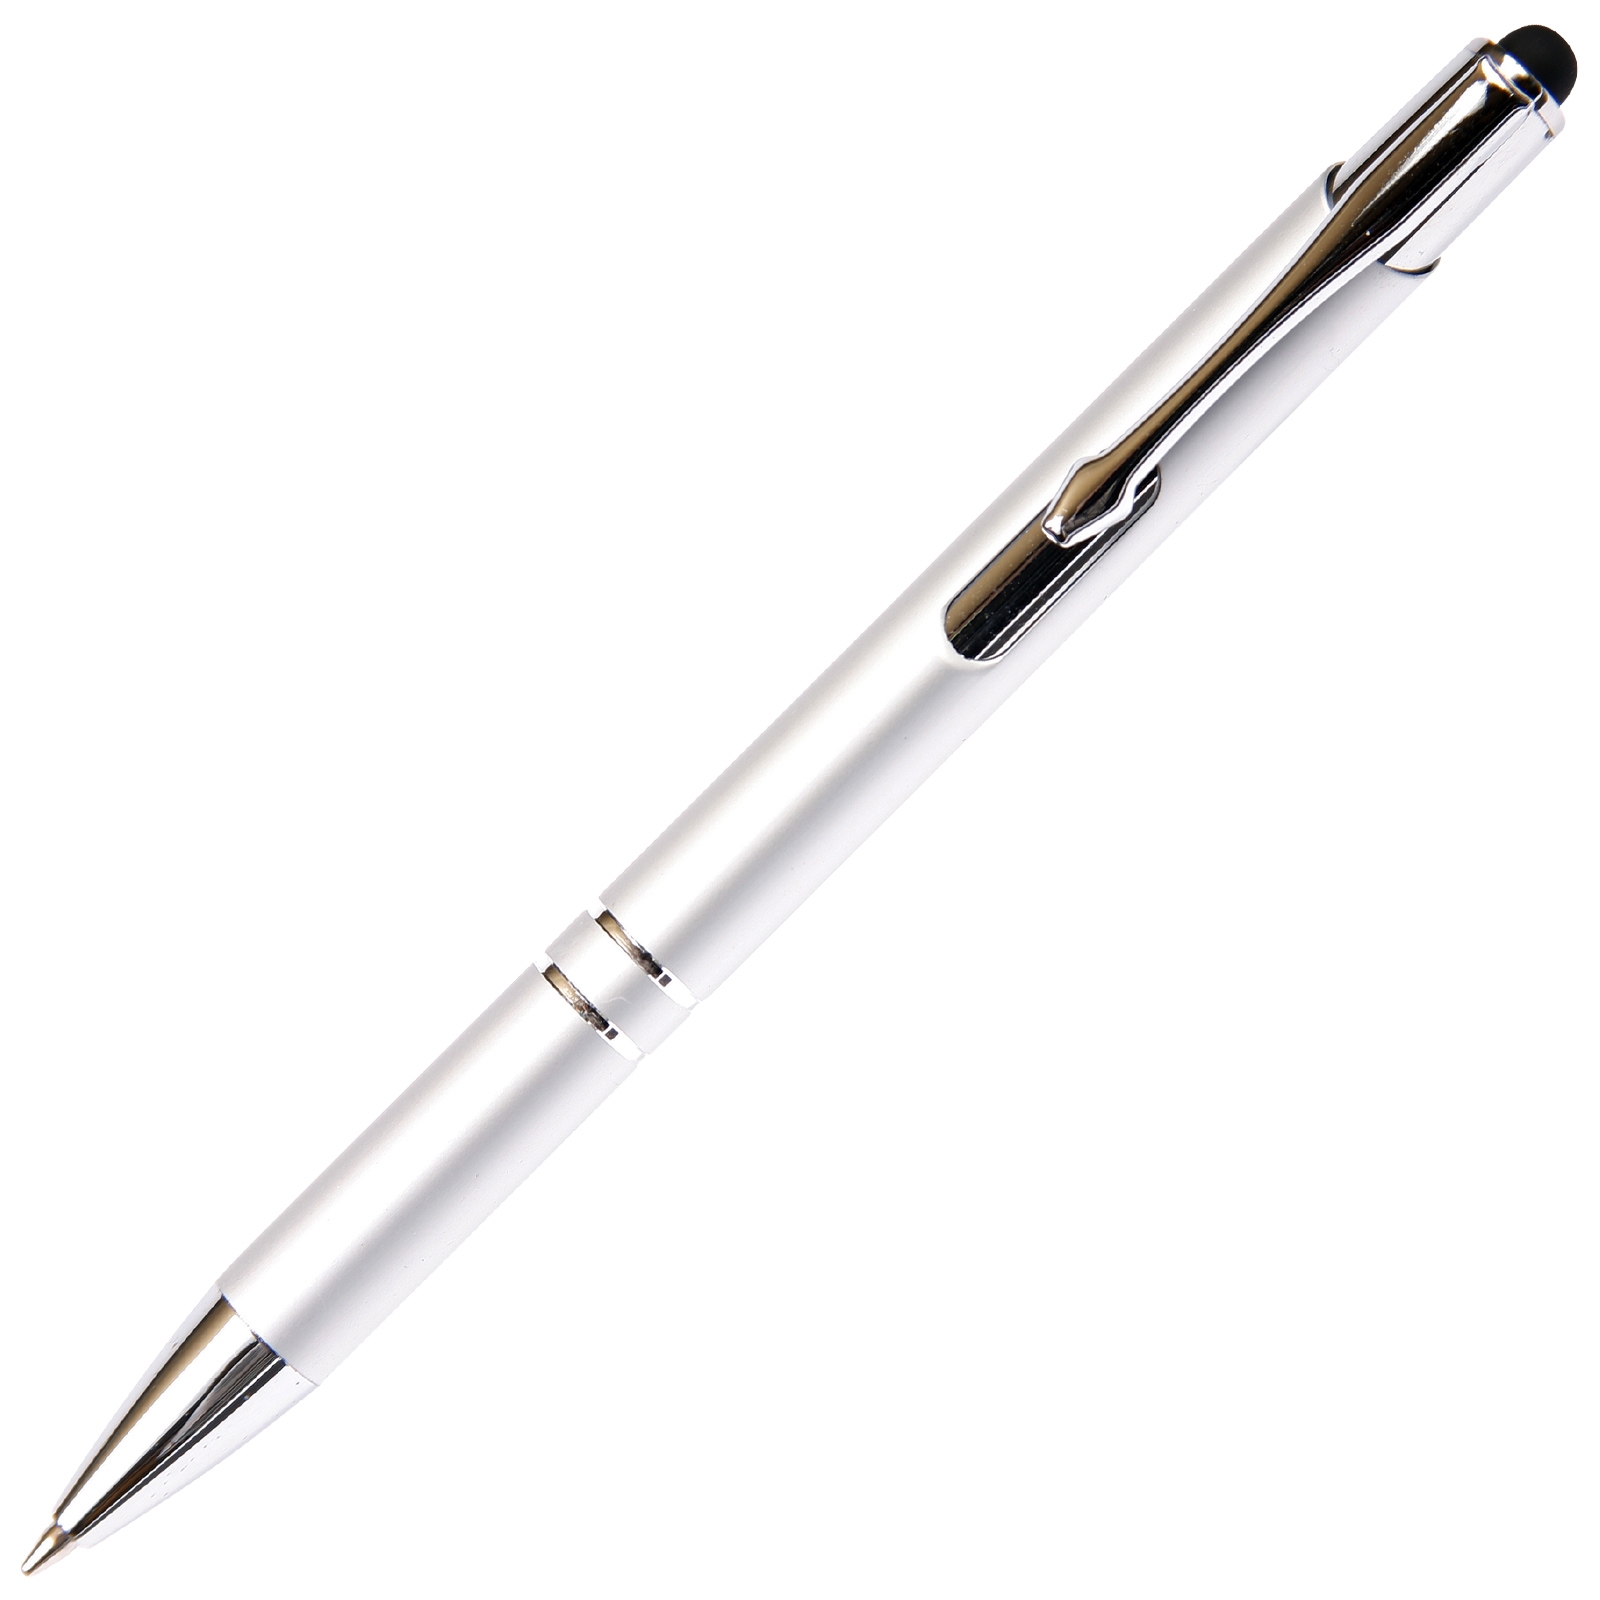 Budget Friendly Stylus JJ Ballpoint Pen - Silver with Medium Tip Point By Lanier Pens